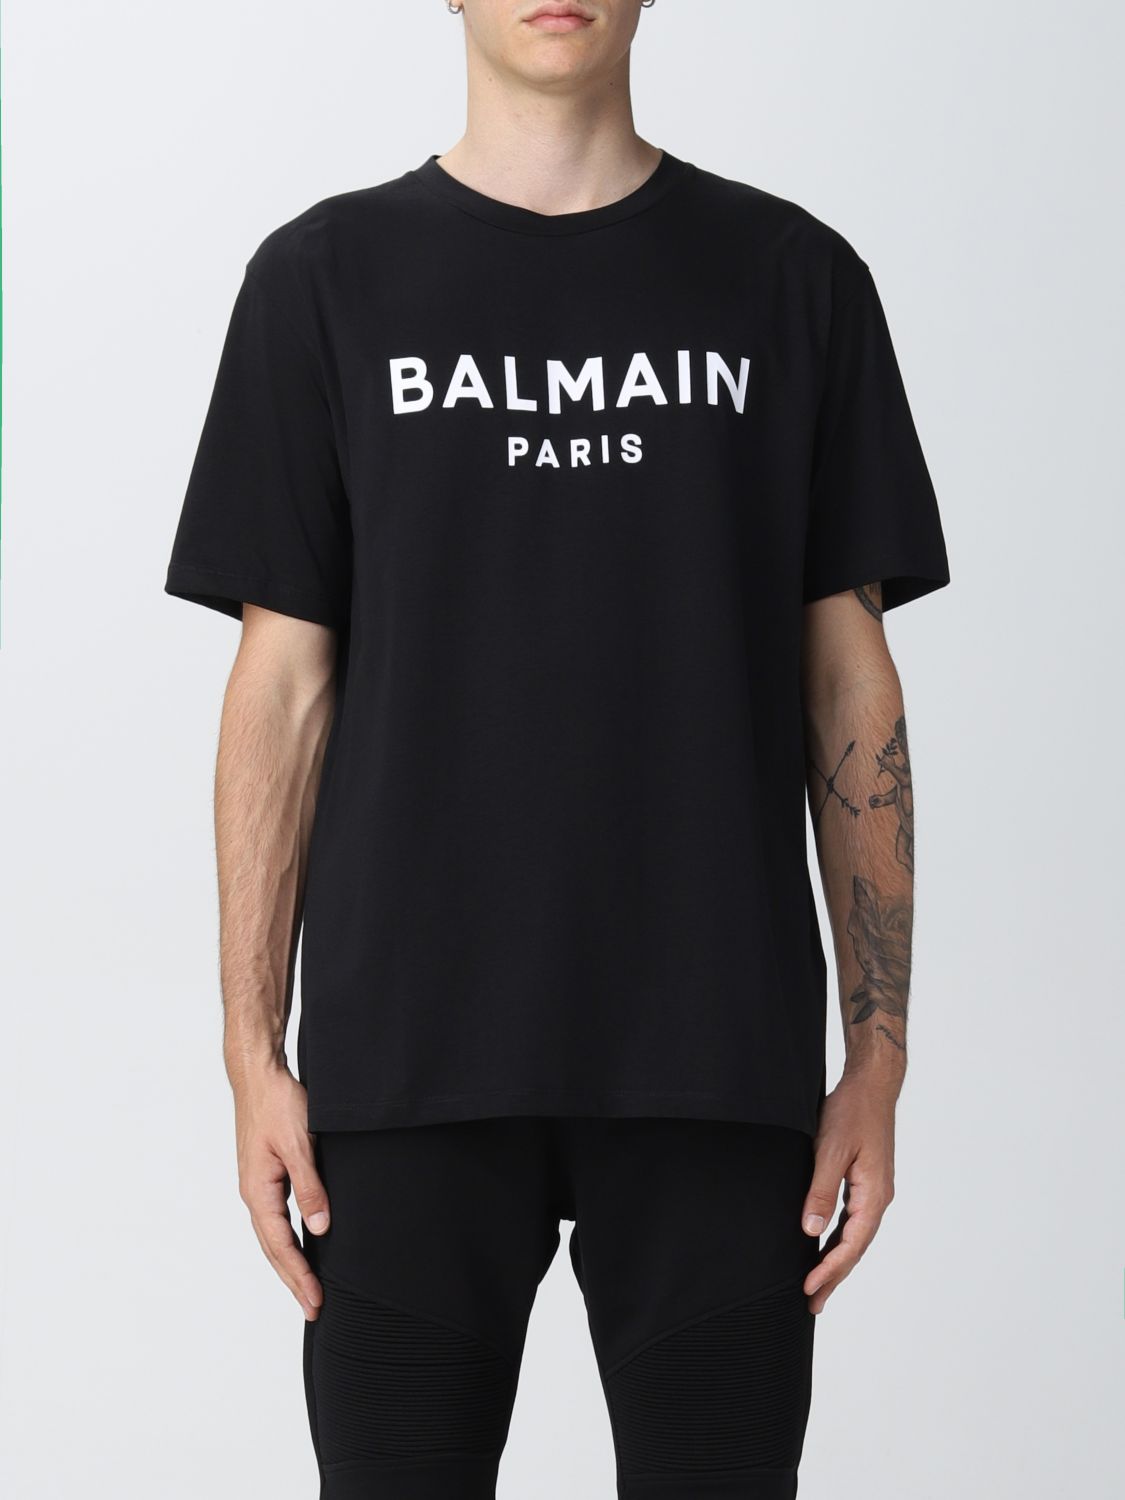 Balmain t-shirt for man